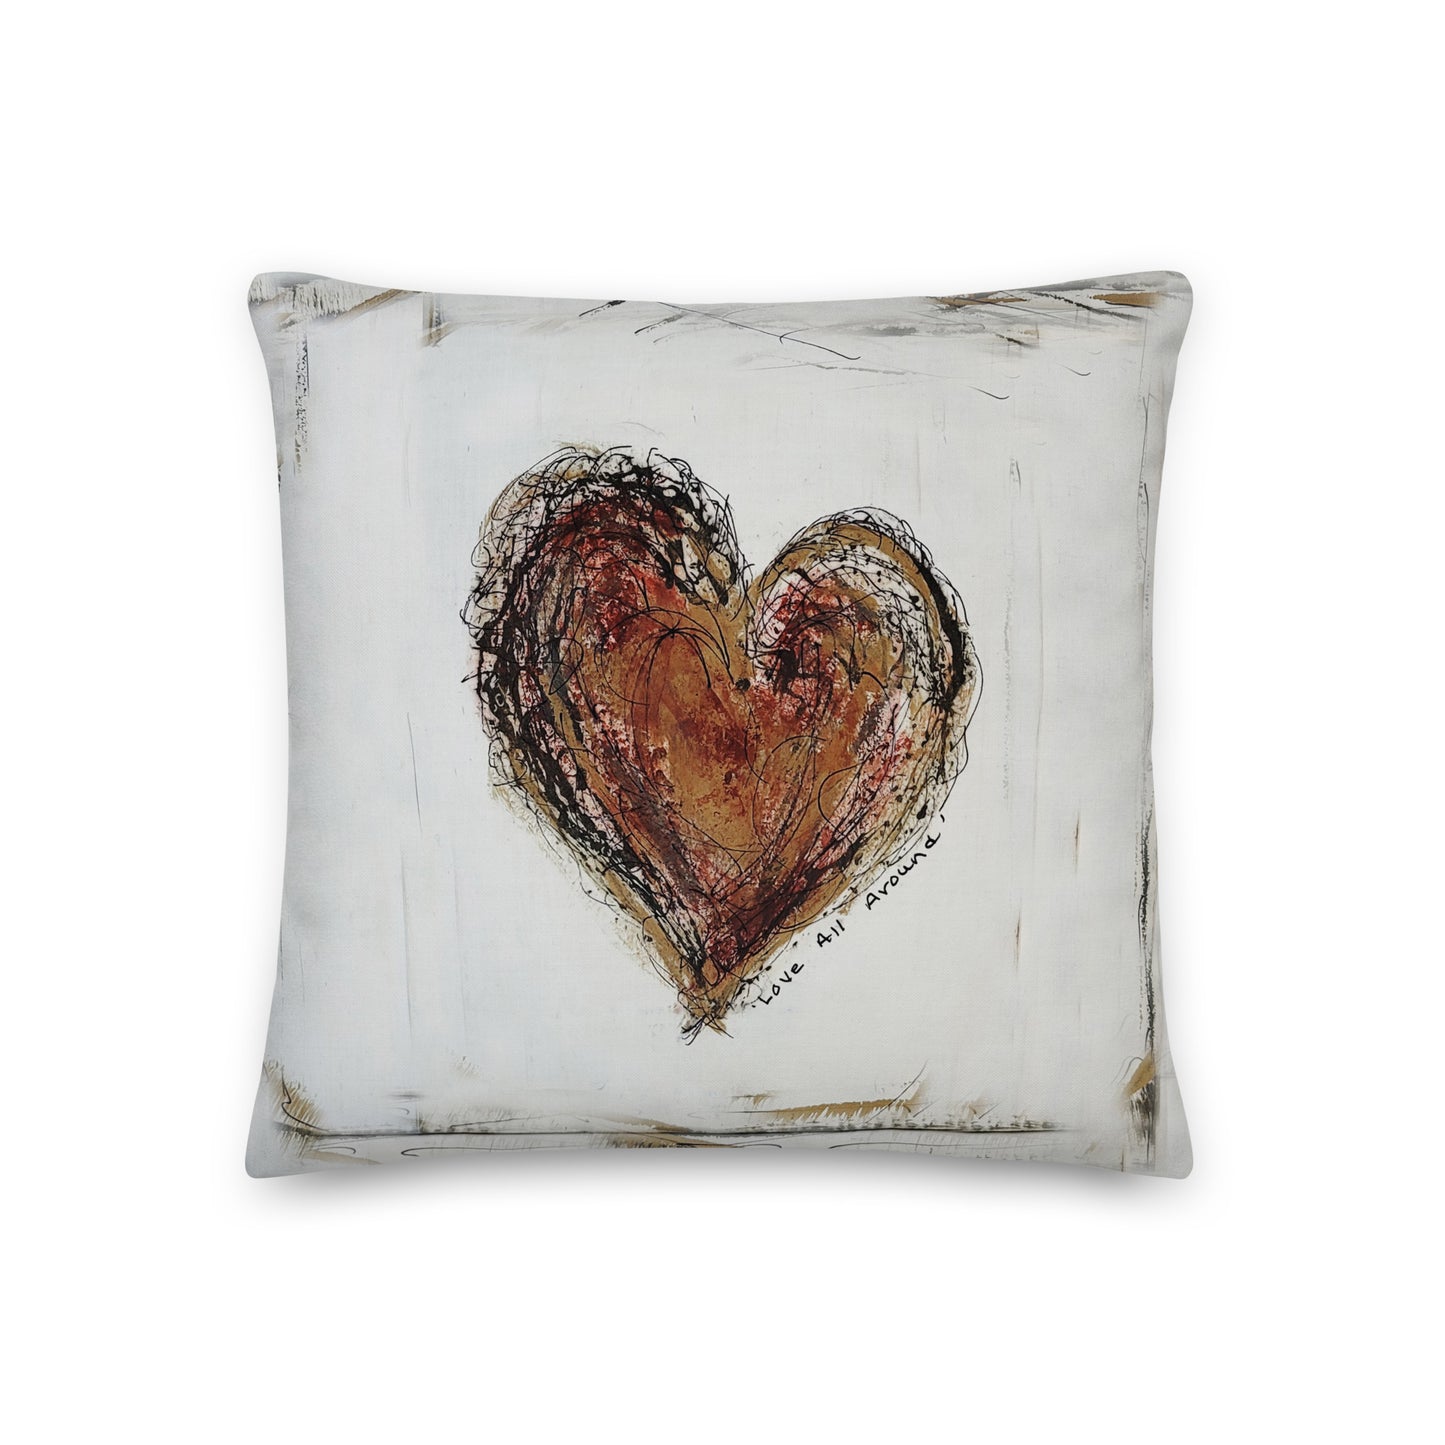 NEW! - Love All Around - Artful Pillow